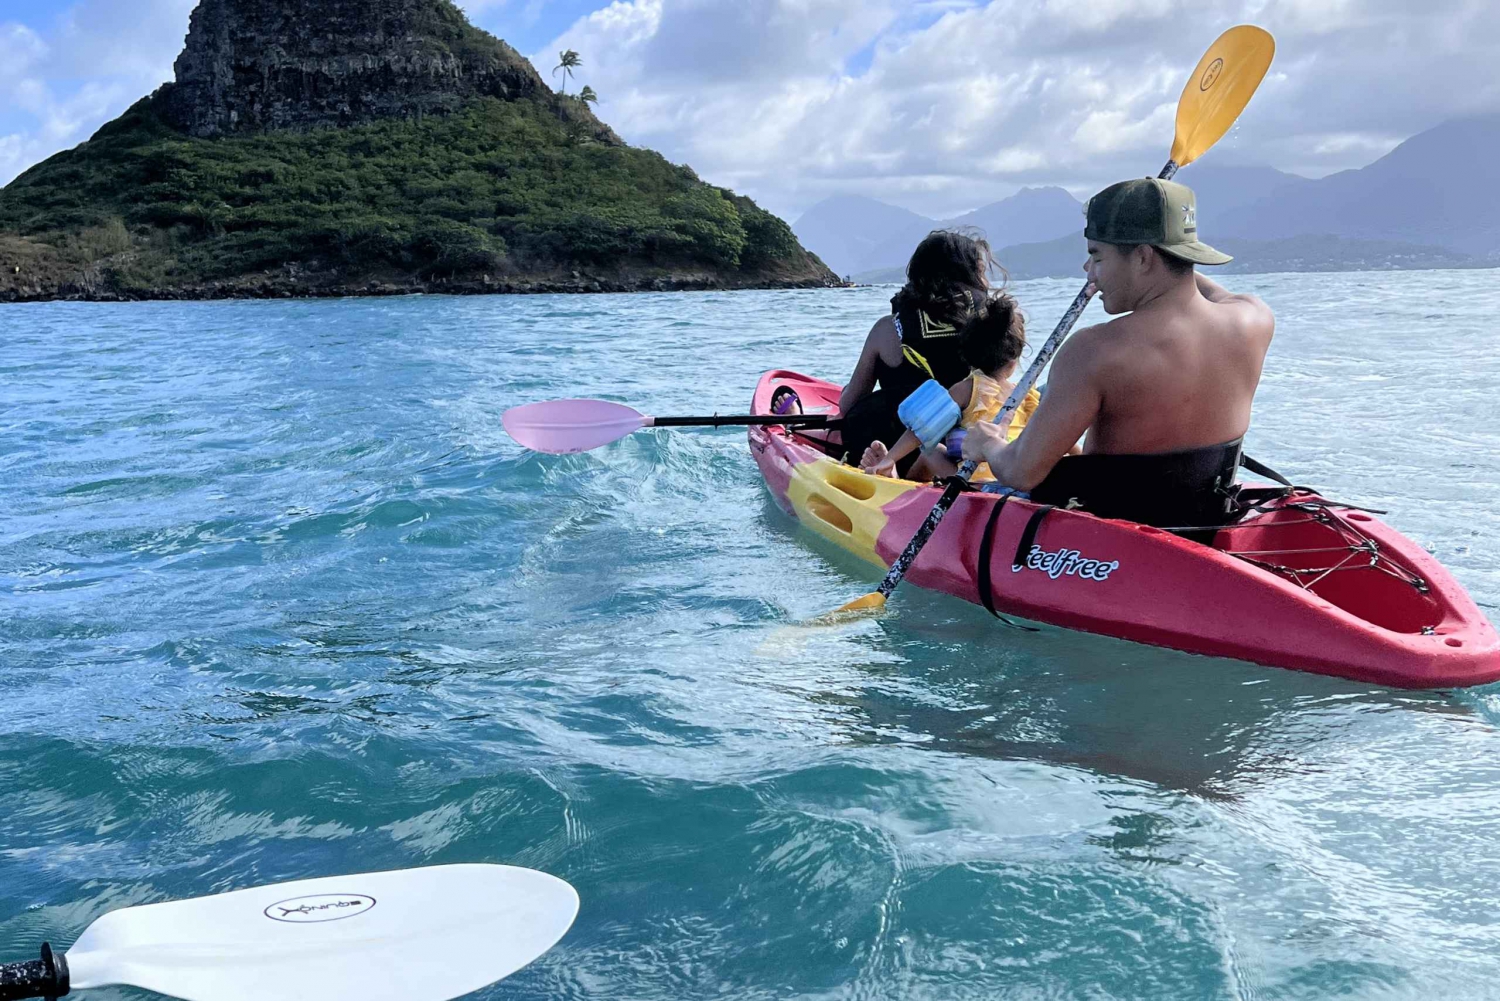 Oahu: Self-Guided Kayaking Tour to Mokoliʻi Islet